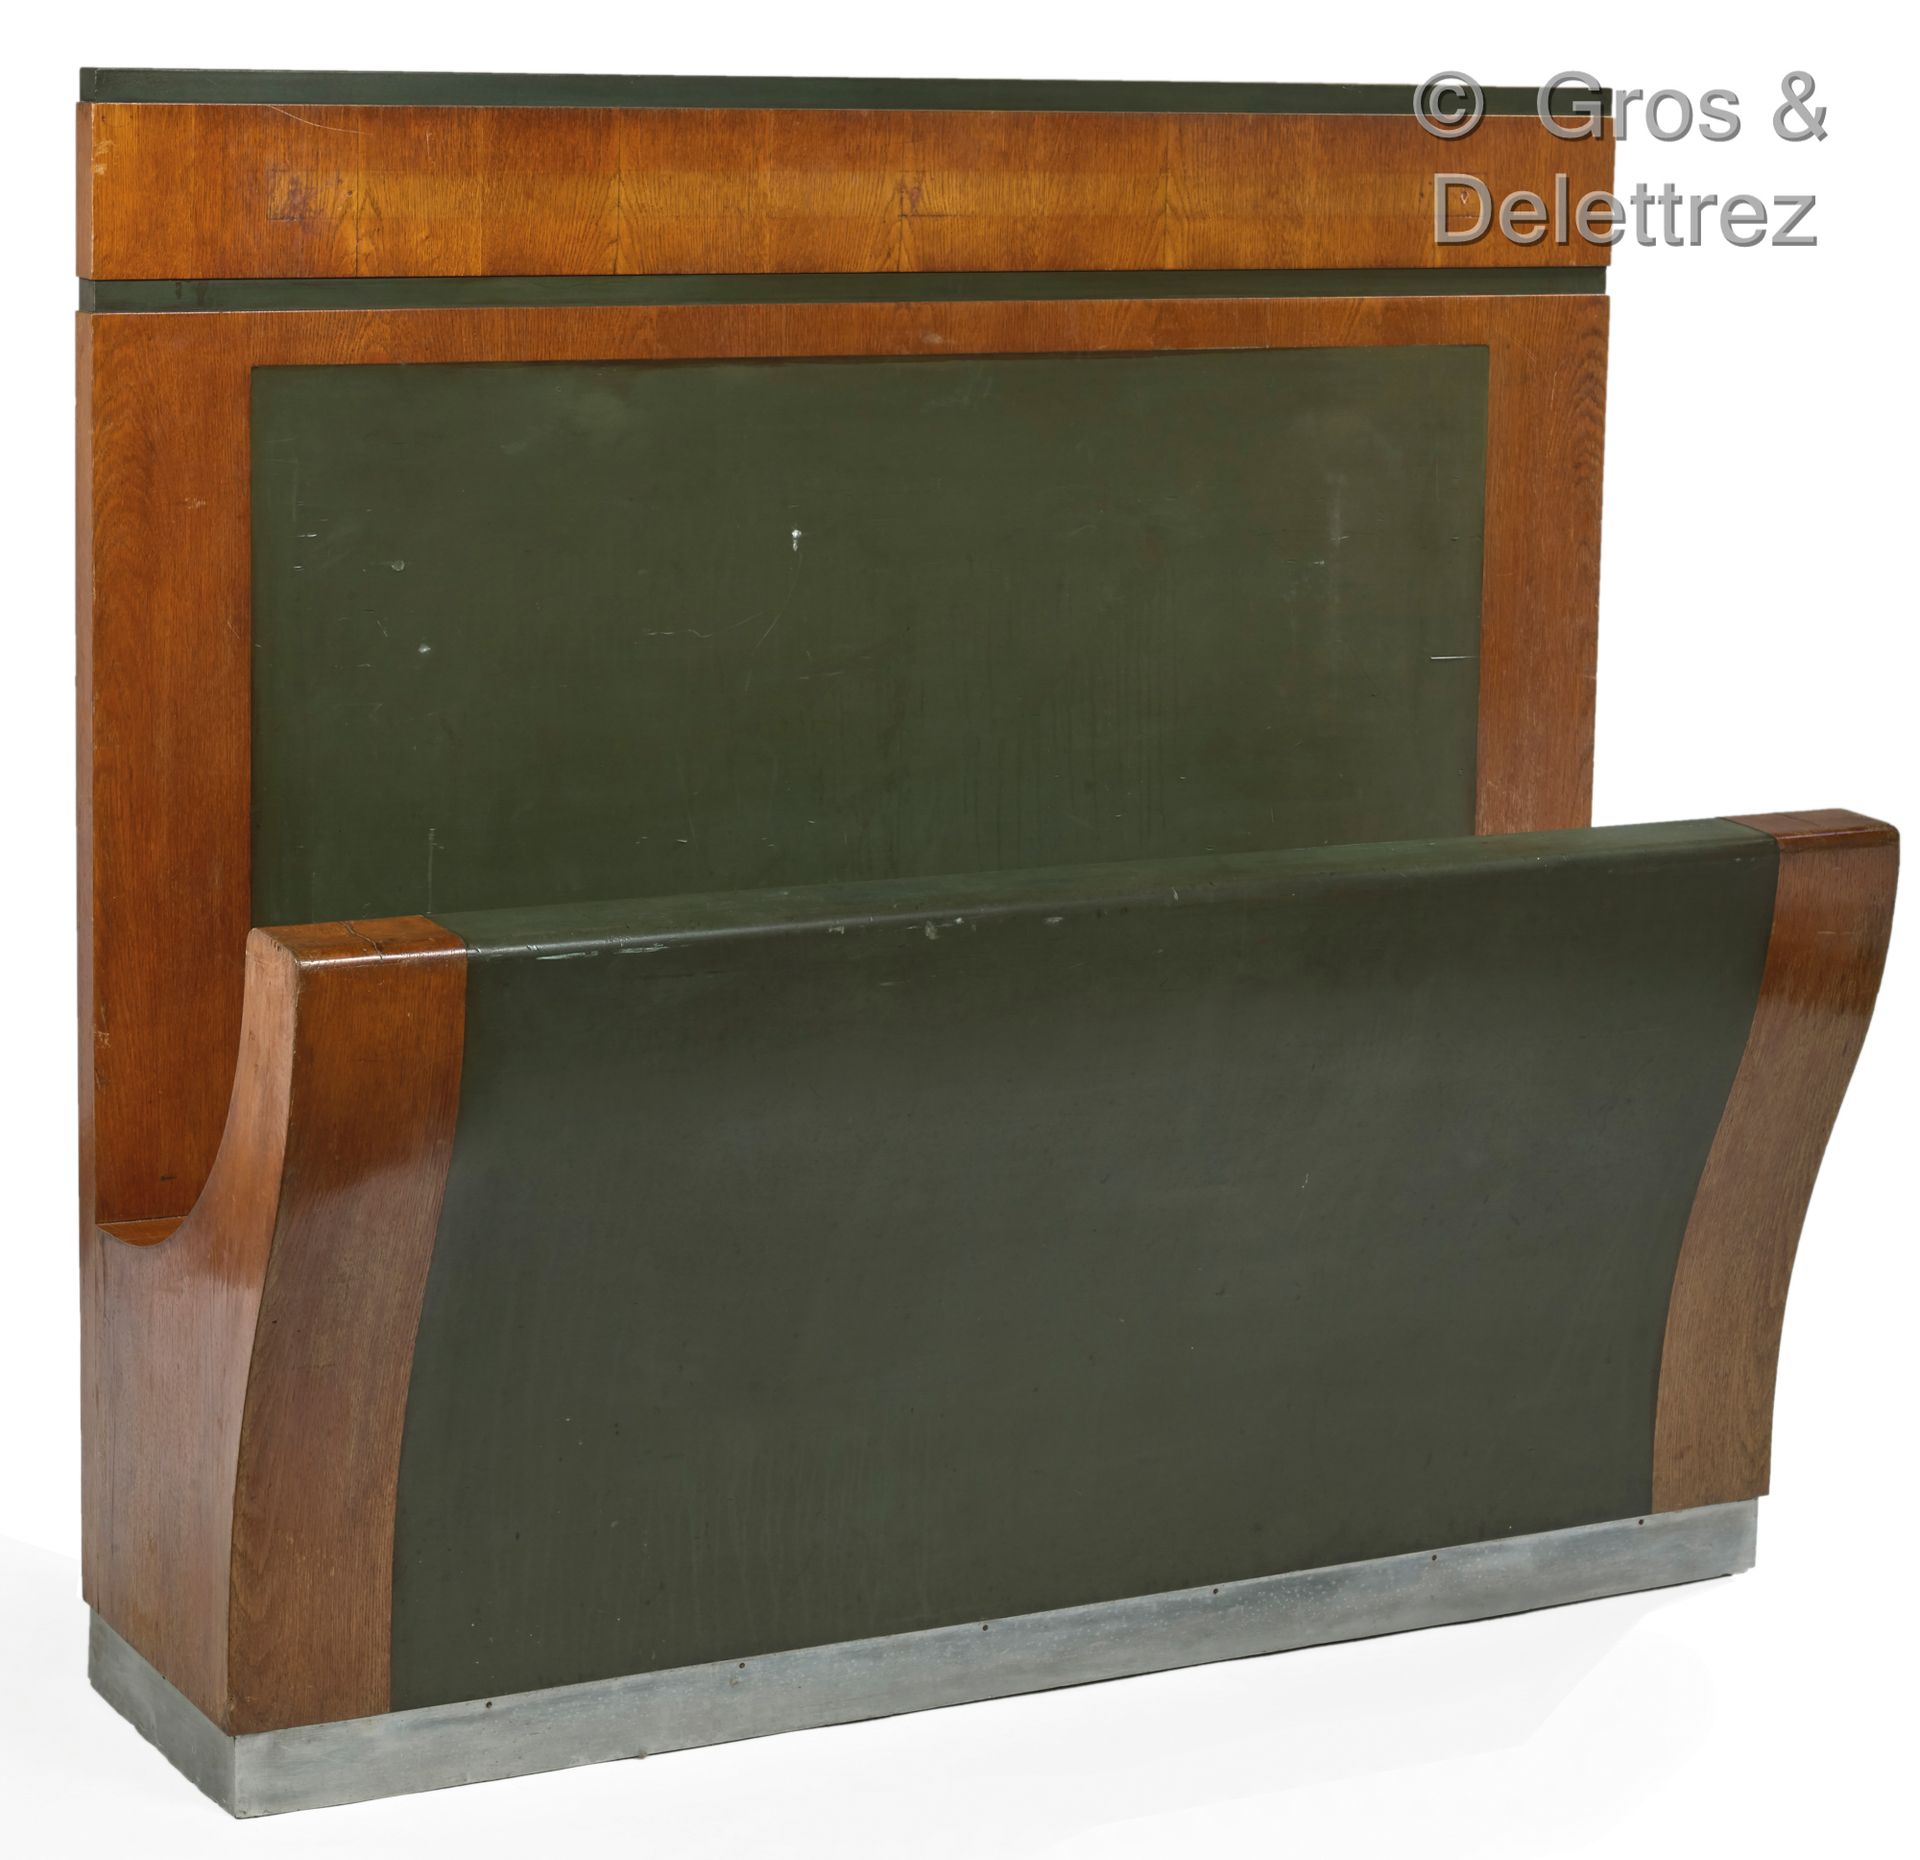 Null Giuseppe PIZZIGONI (XIX-XXth)

实心橡木、绿色油毡和底部铝条的前厅服装家具。

Zonca公司制造，贝加莫1929年

&hellip;